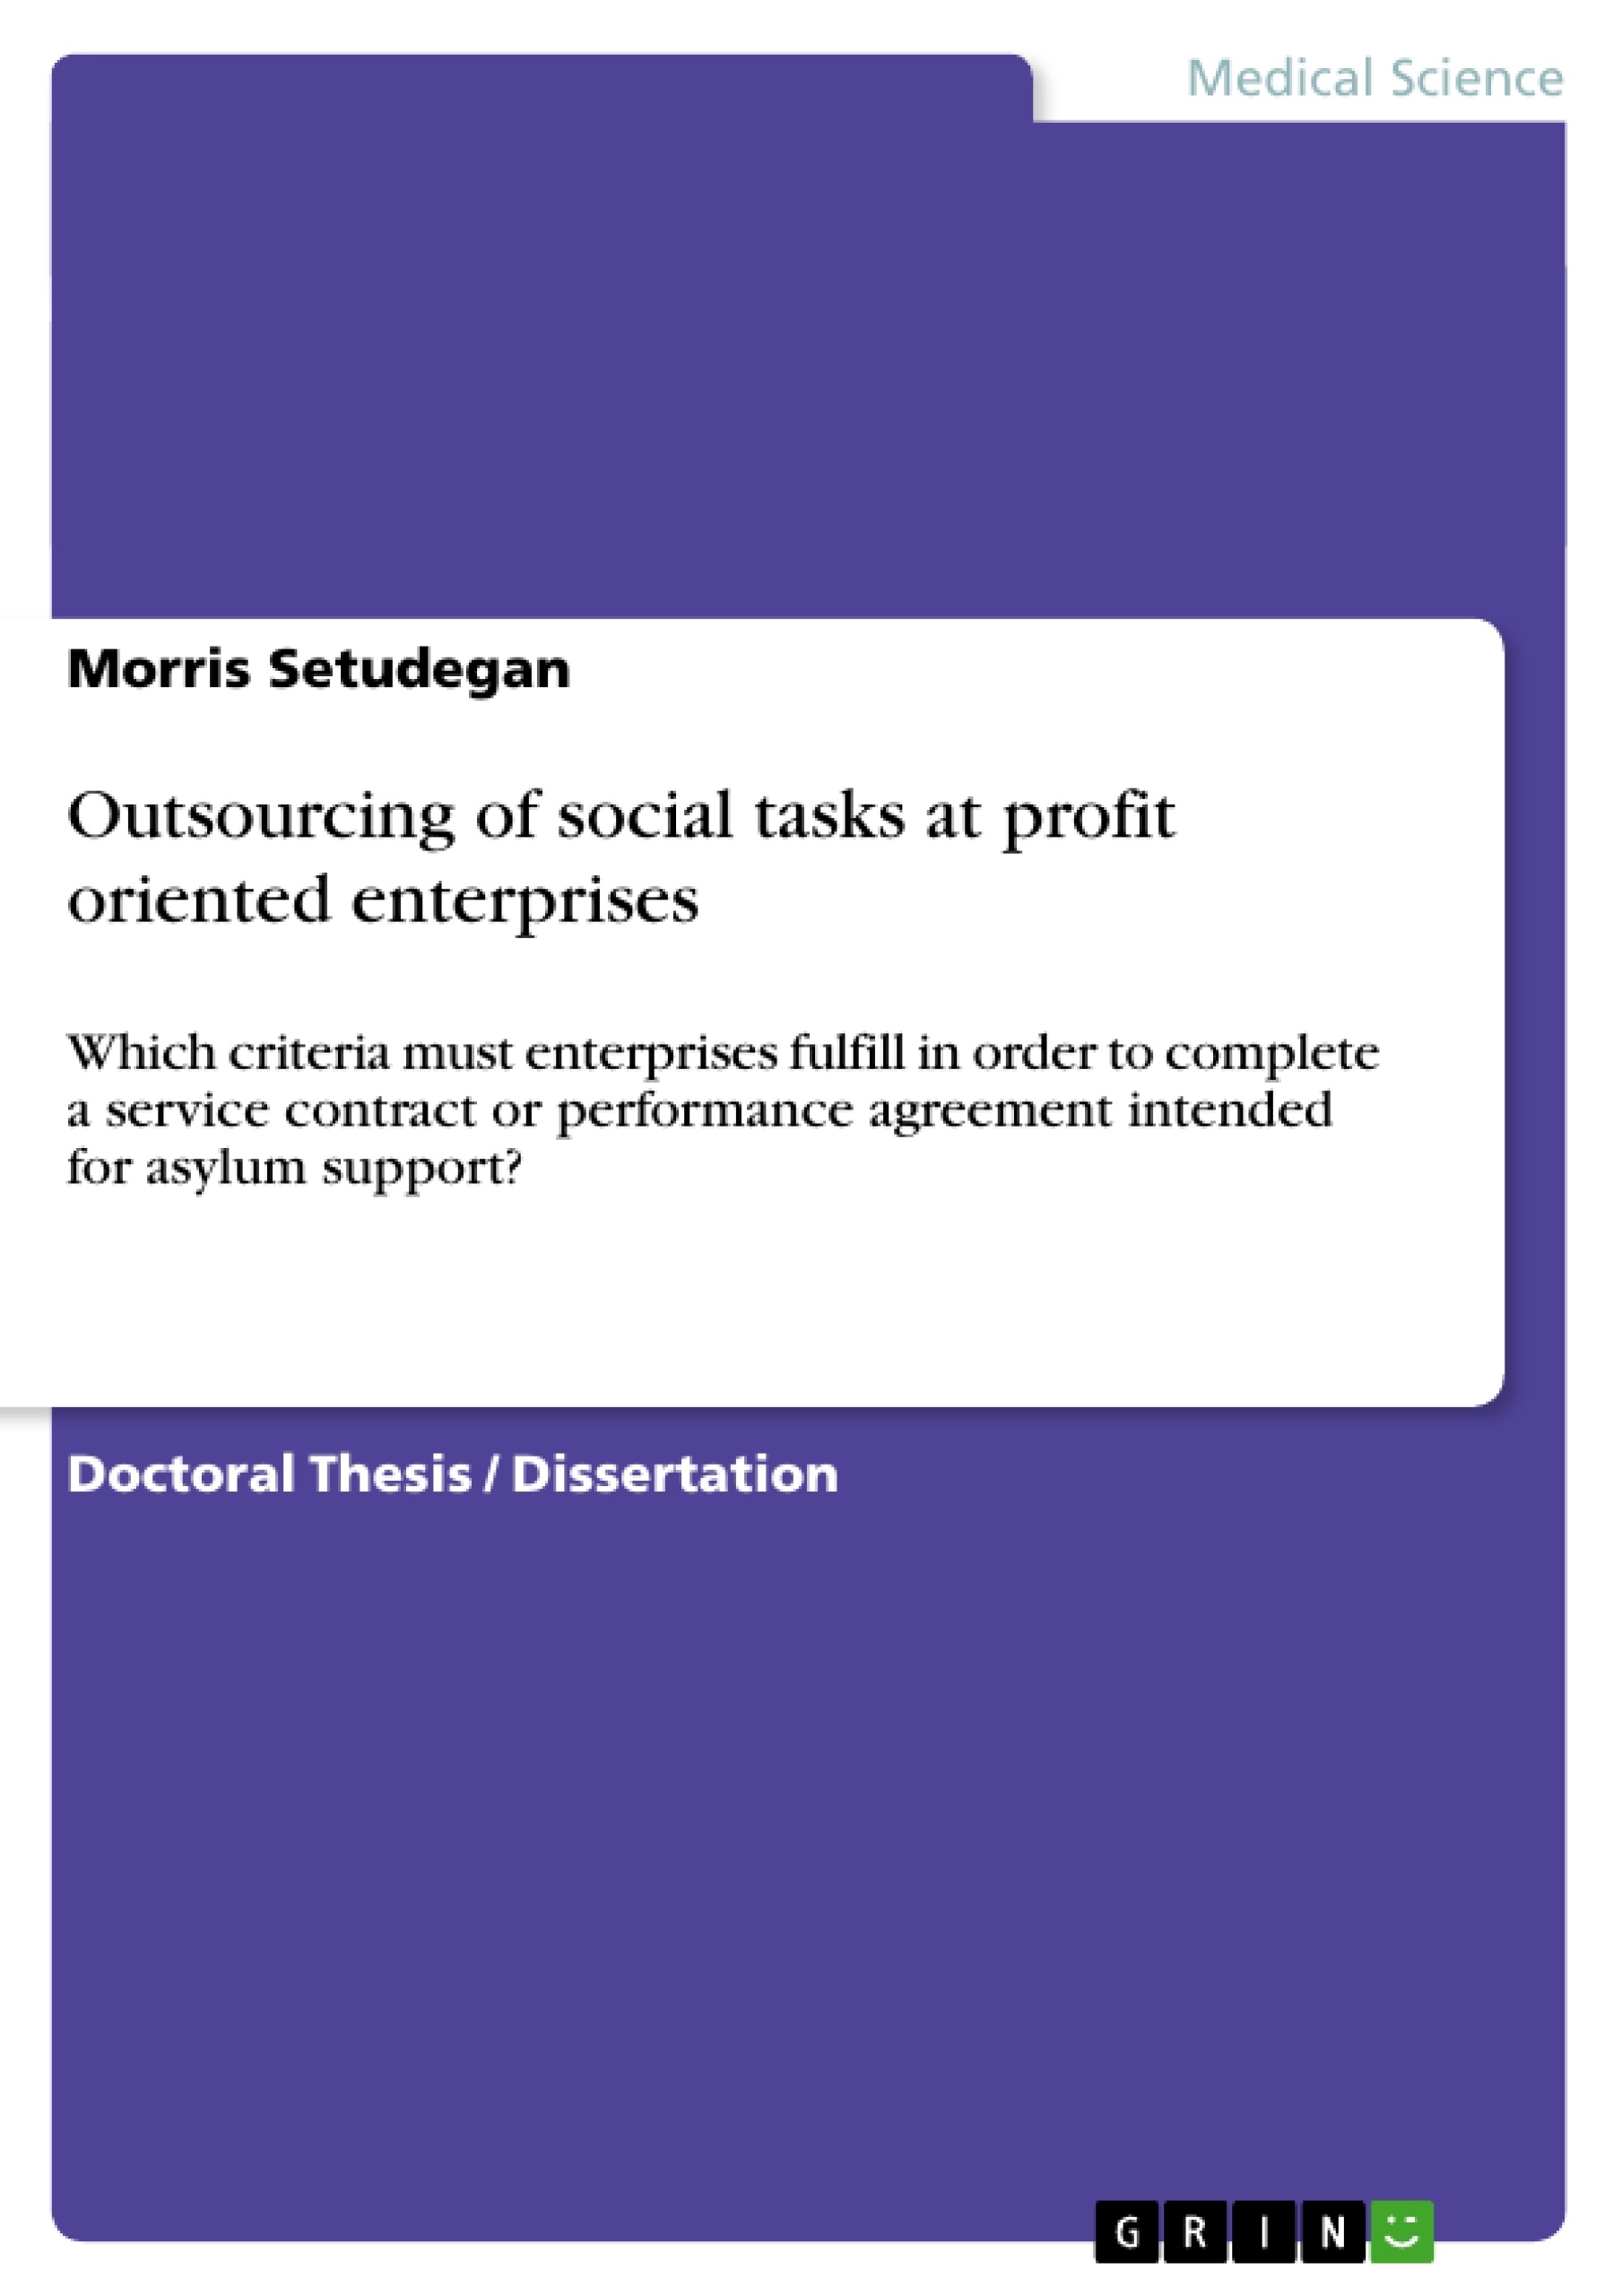 Título: Outsourcing of social tasks at profit oriented enterprises